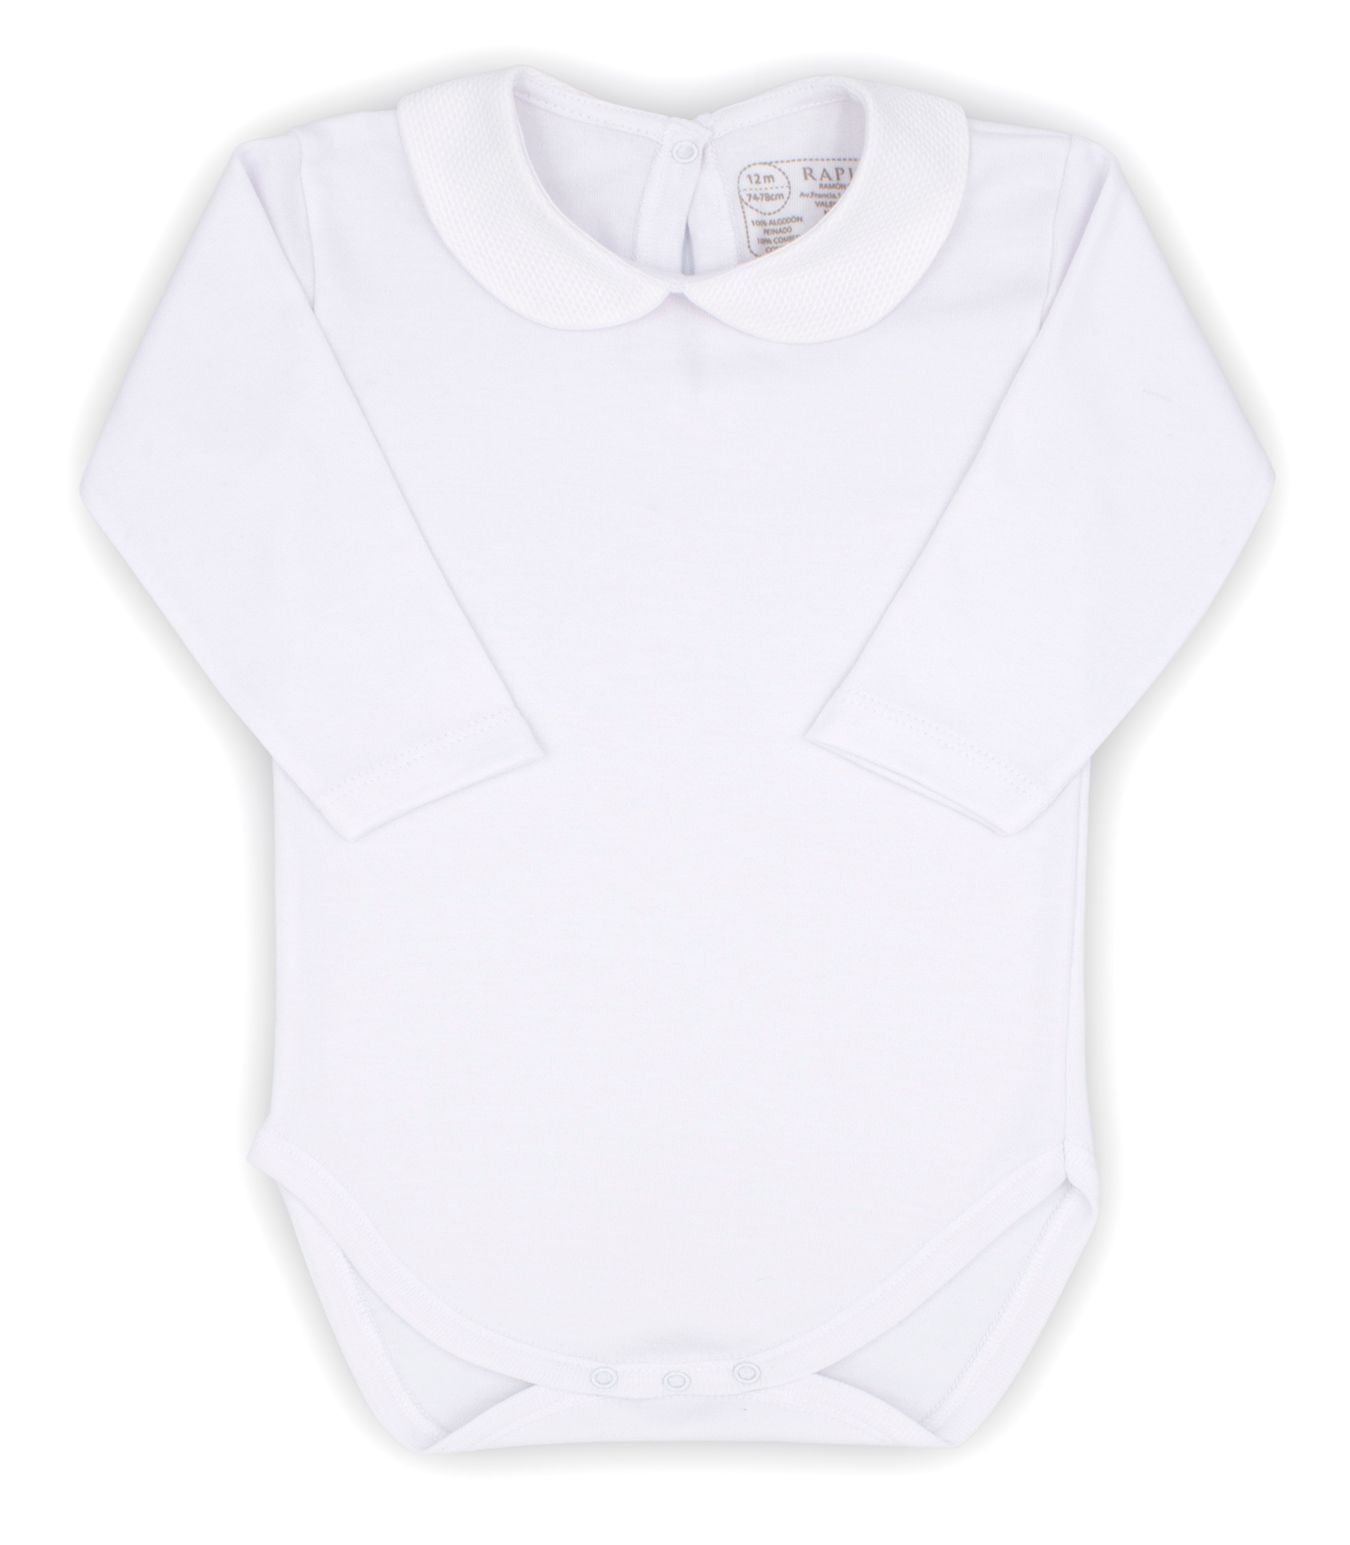 Rapife Baby Unisex White Cotton Body Top Peter Pan Collar